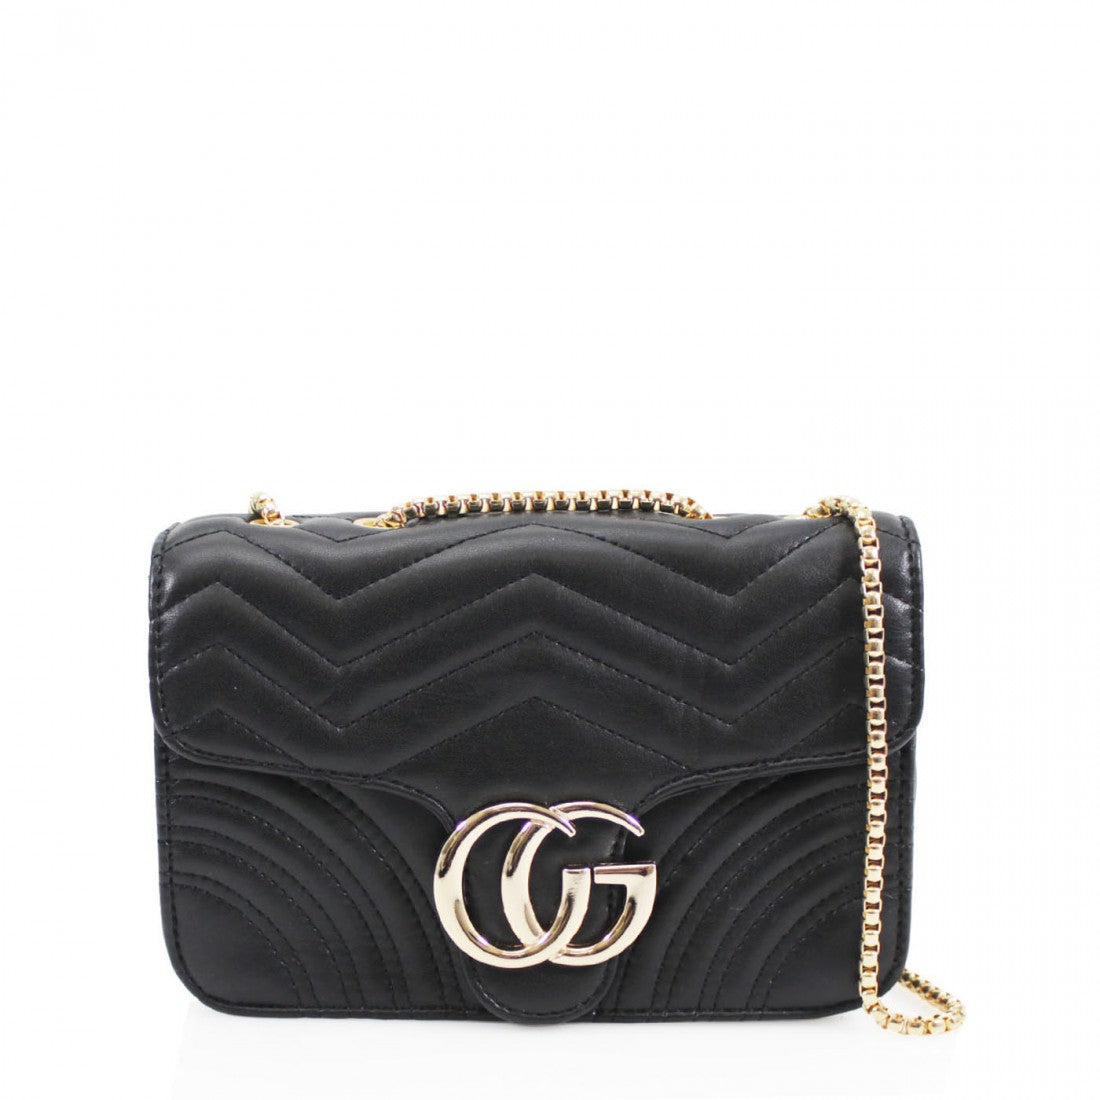 The Gabriela CG Designer Inspired Bag – Bella Boutique